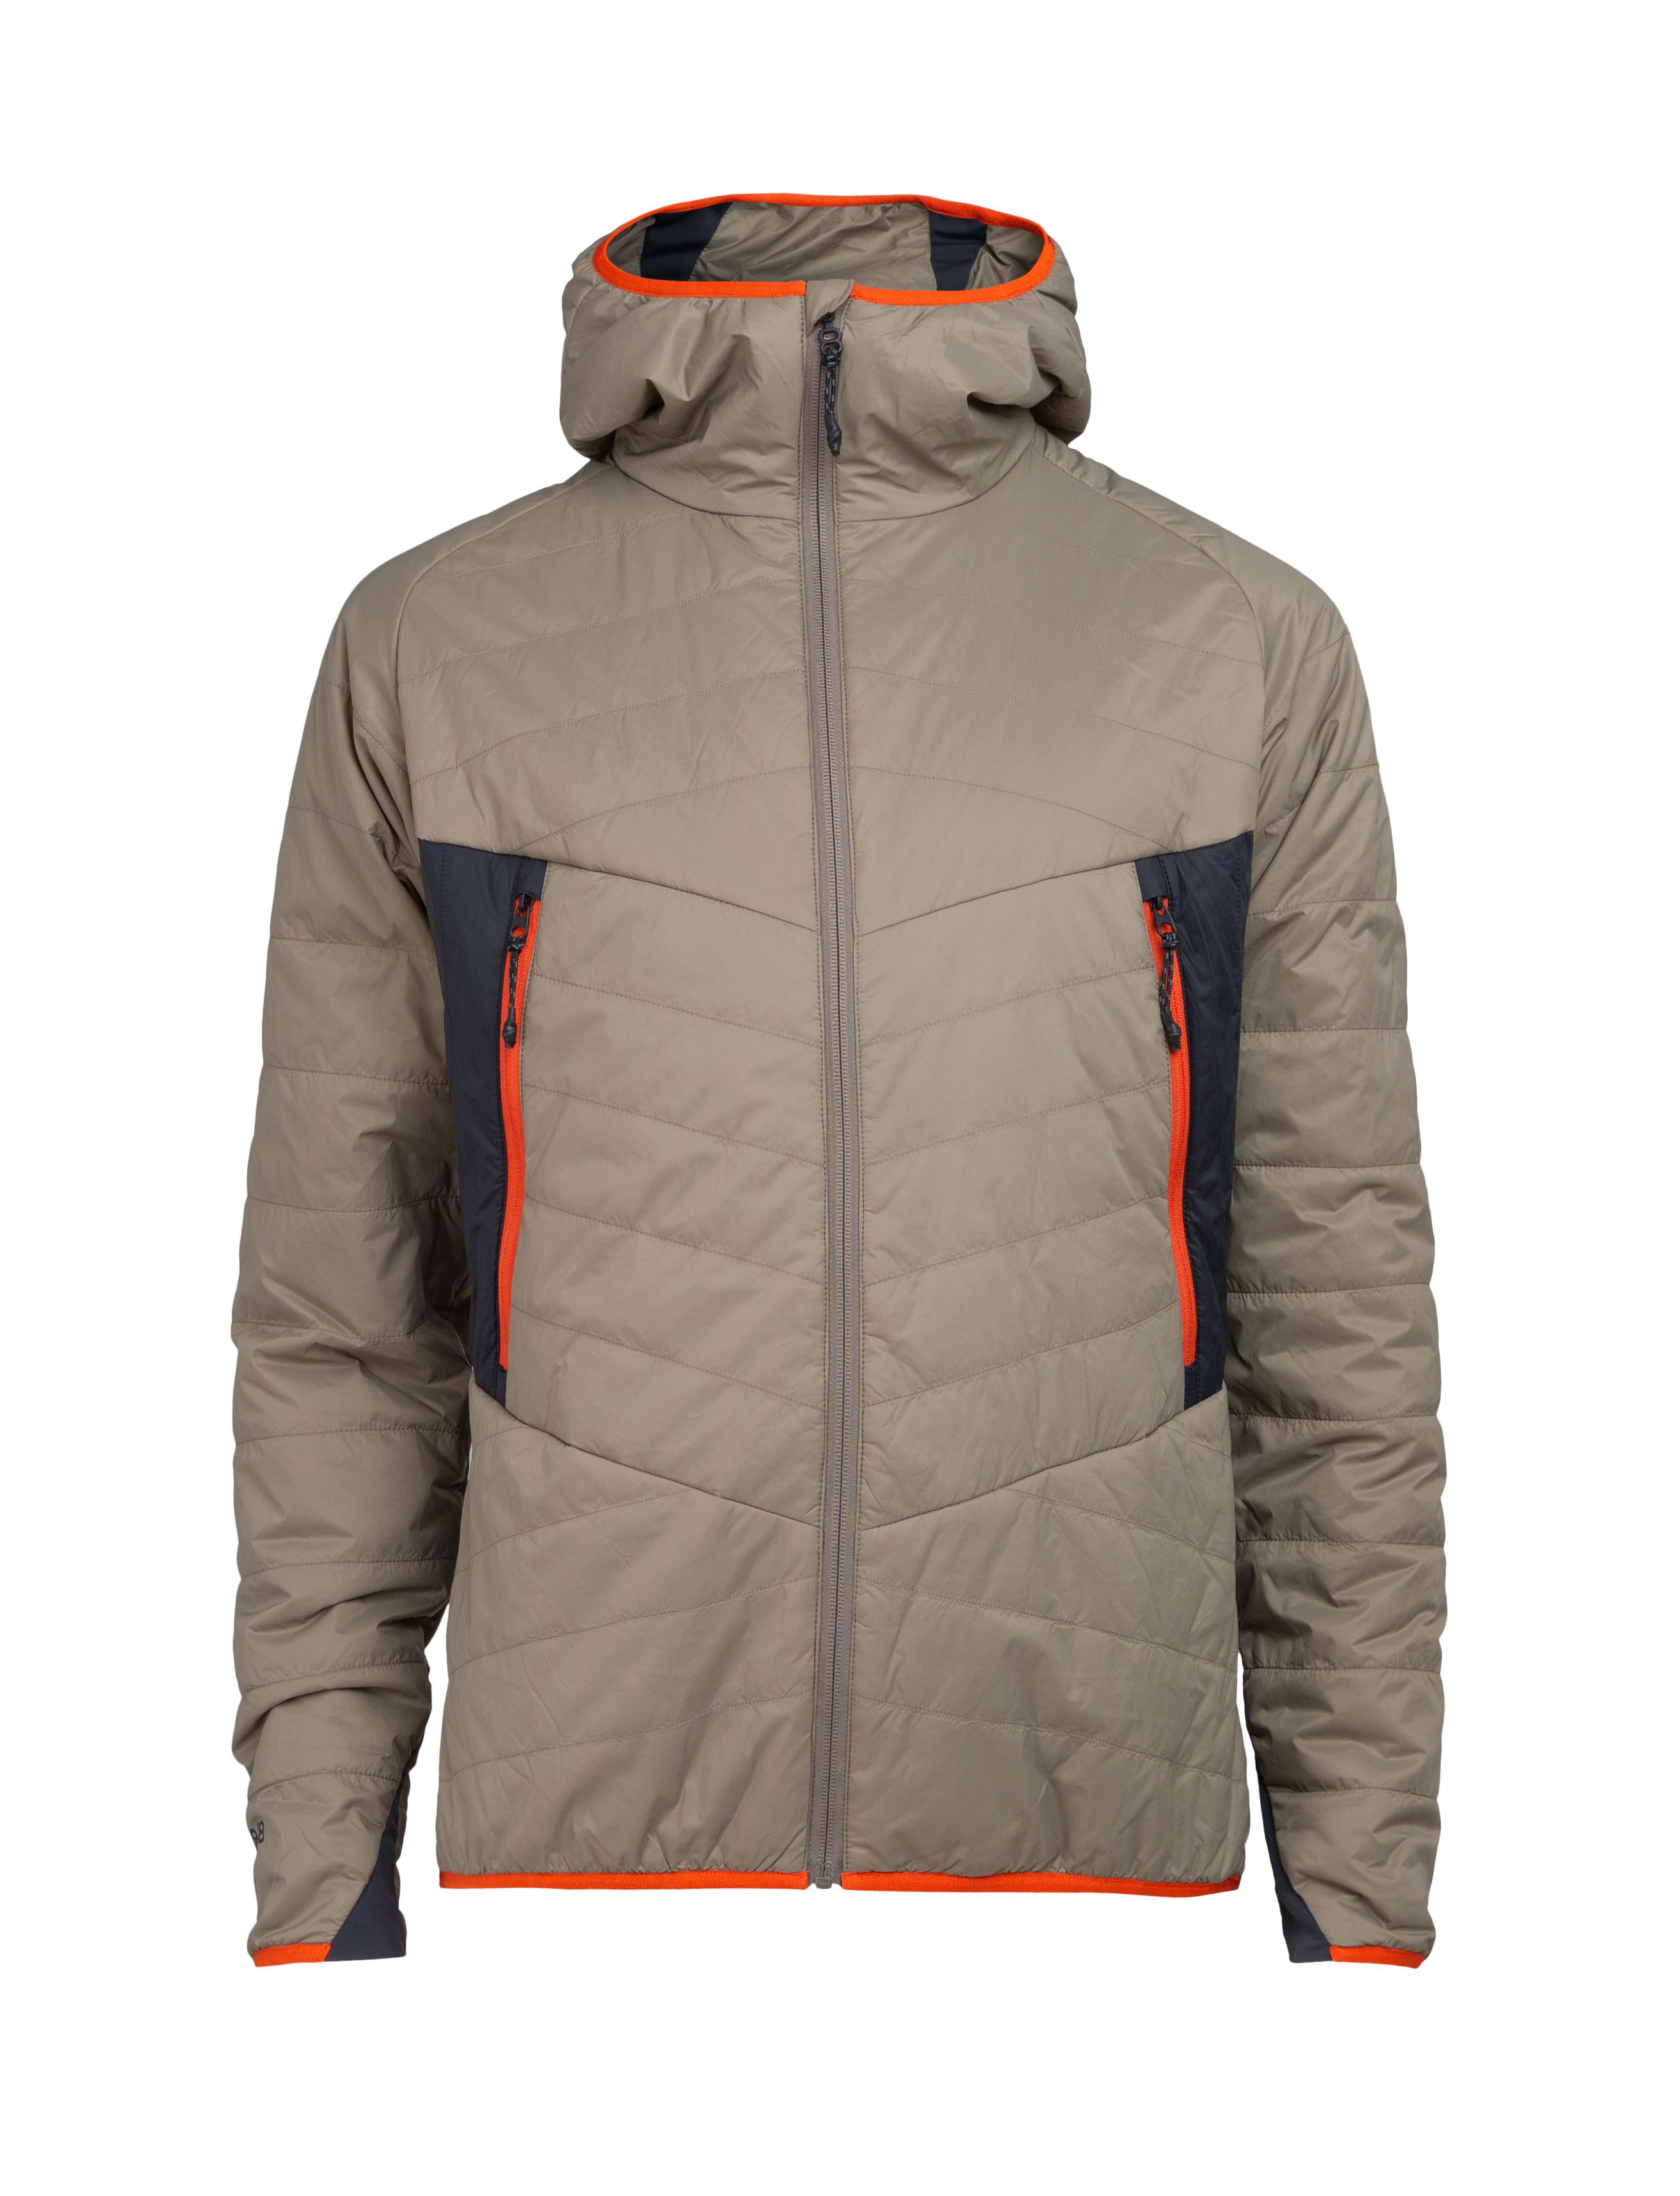 Weisshorn Liner Fallen rock - Beige lightweight jacket men